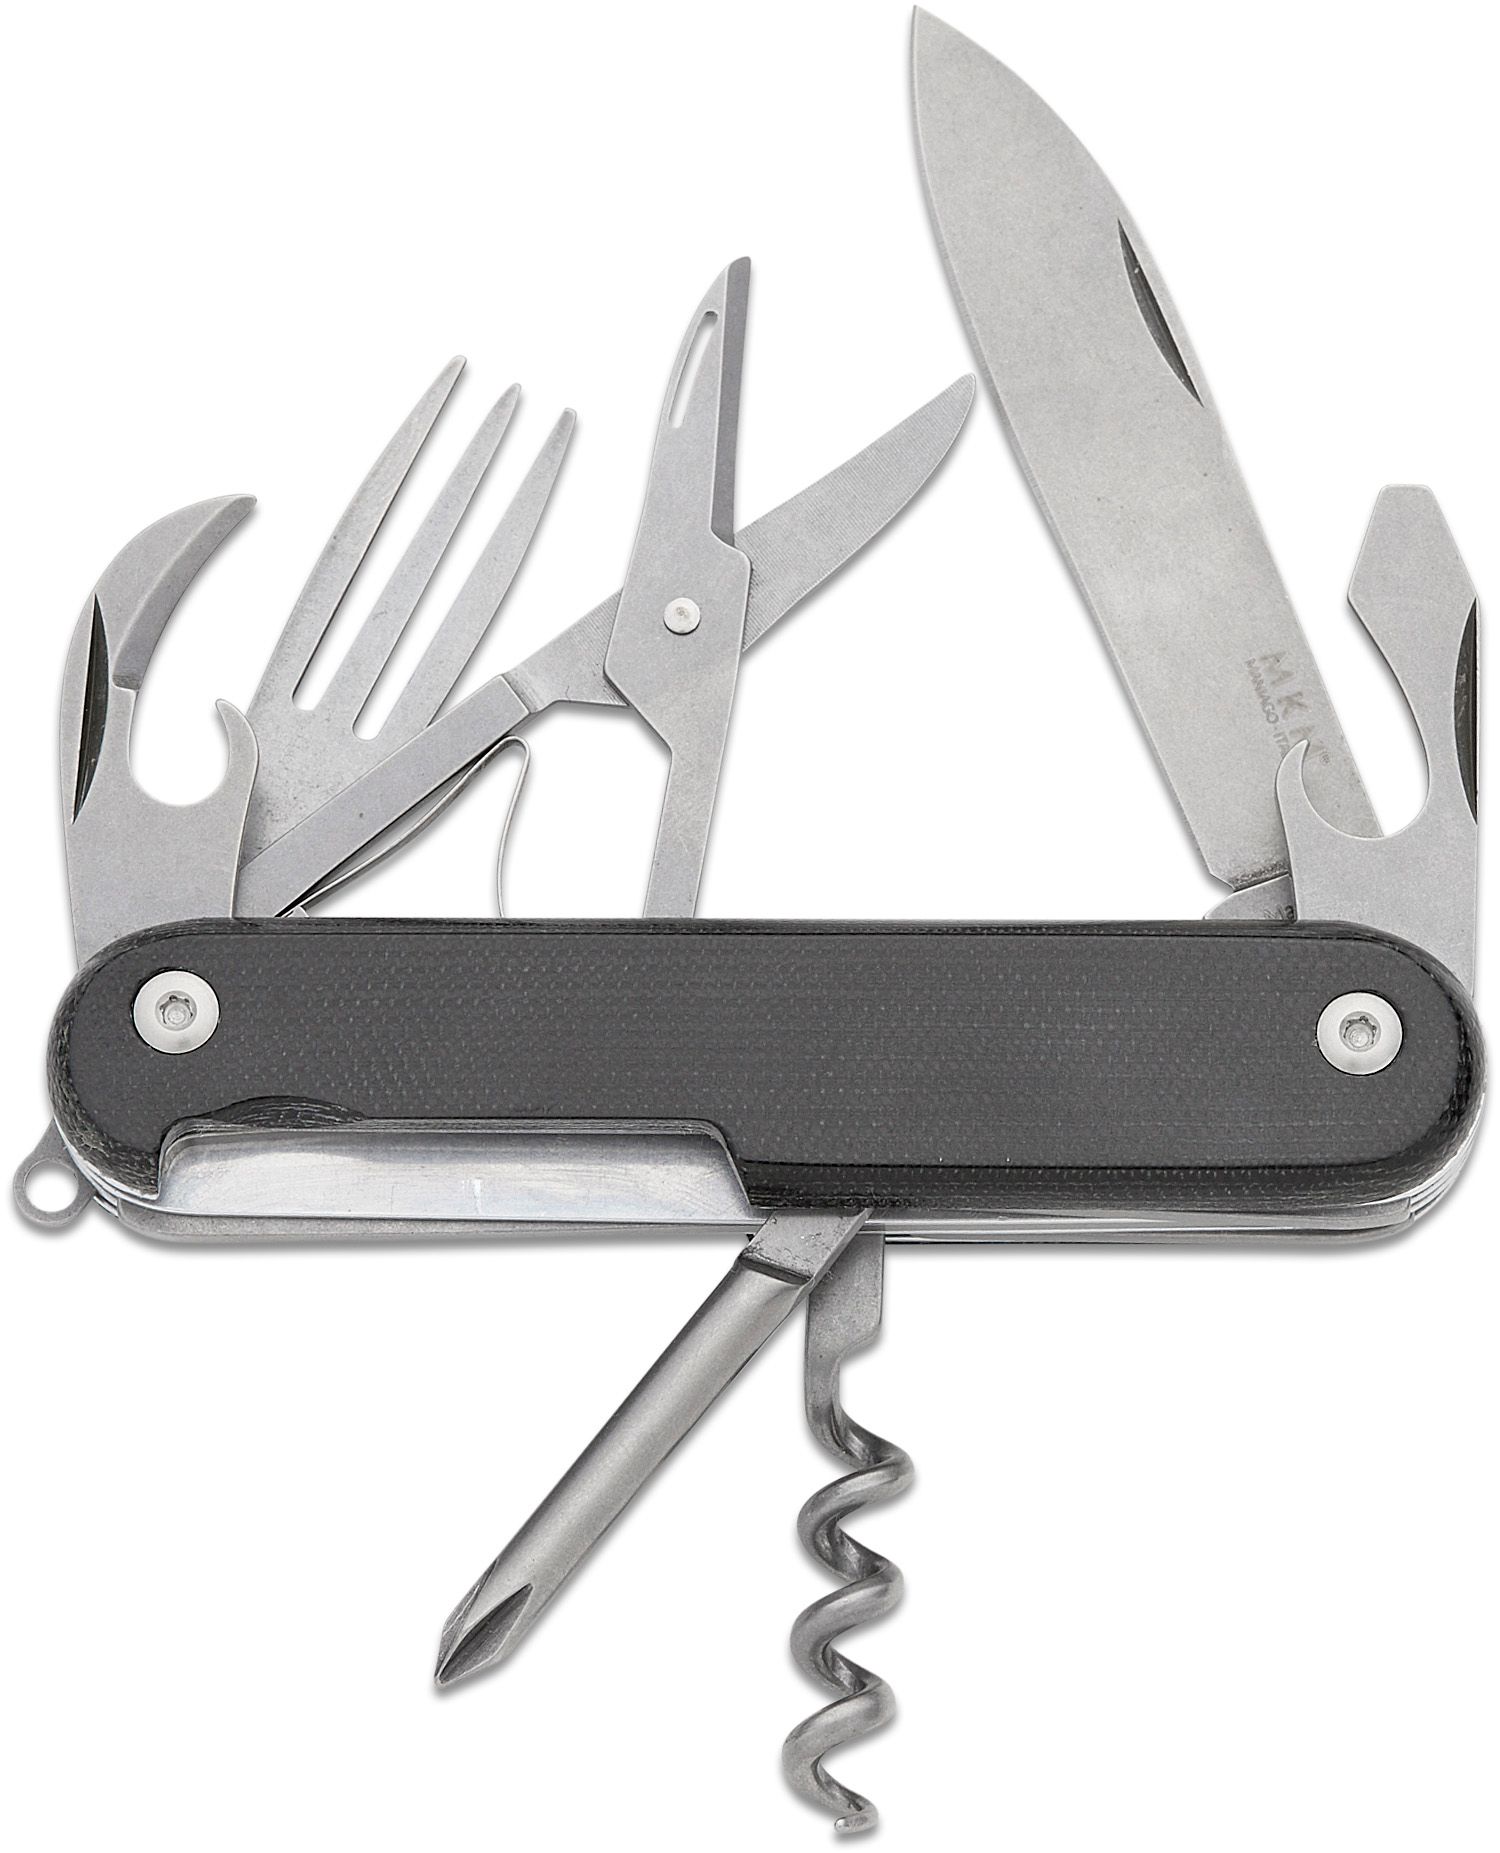 Sharps Cutlery - MANICURE SCISSORS - MKM Online Store - Maniago Knife Makers